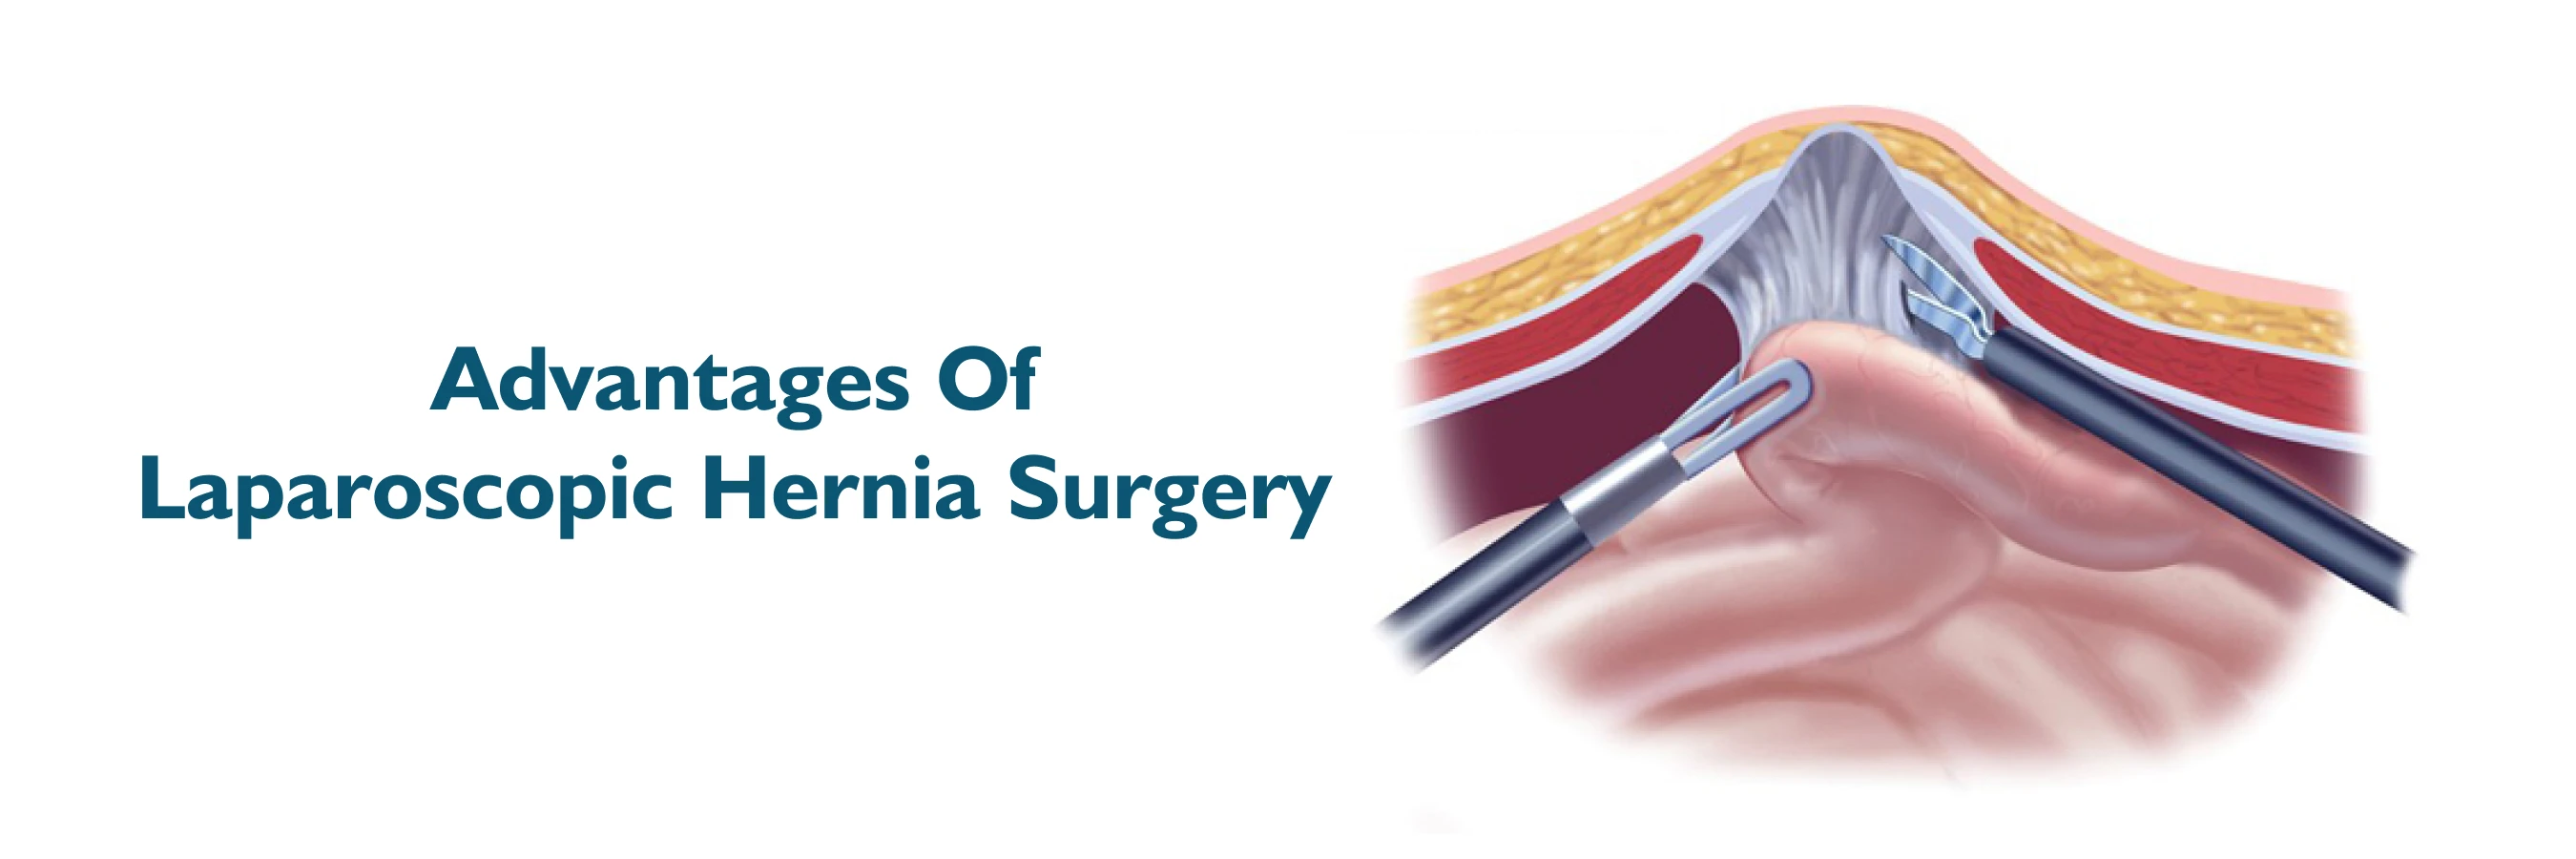 Benefits of Laparoscopic Hernia Surgery